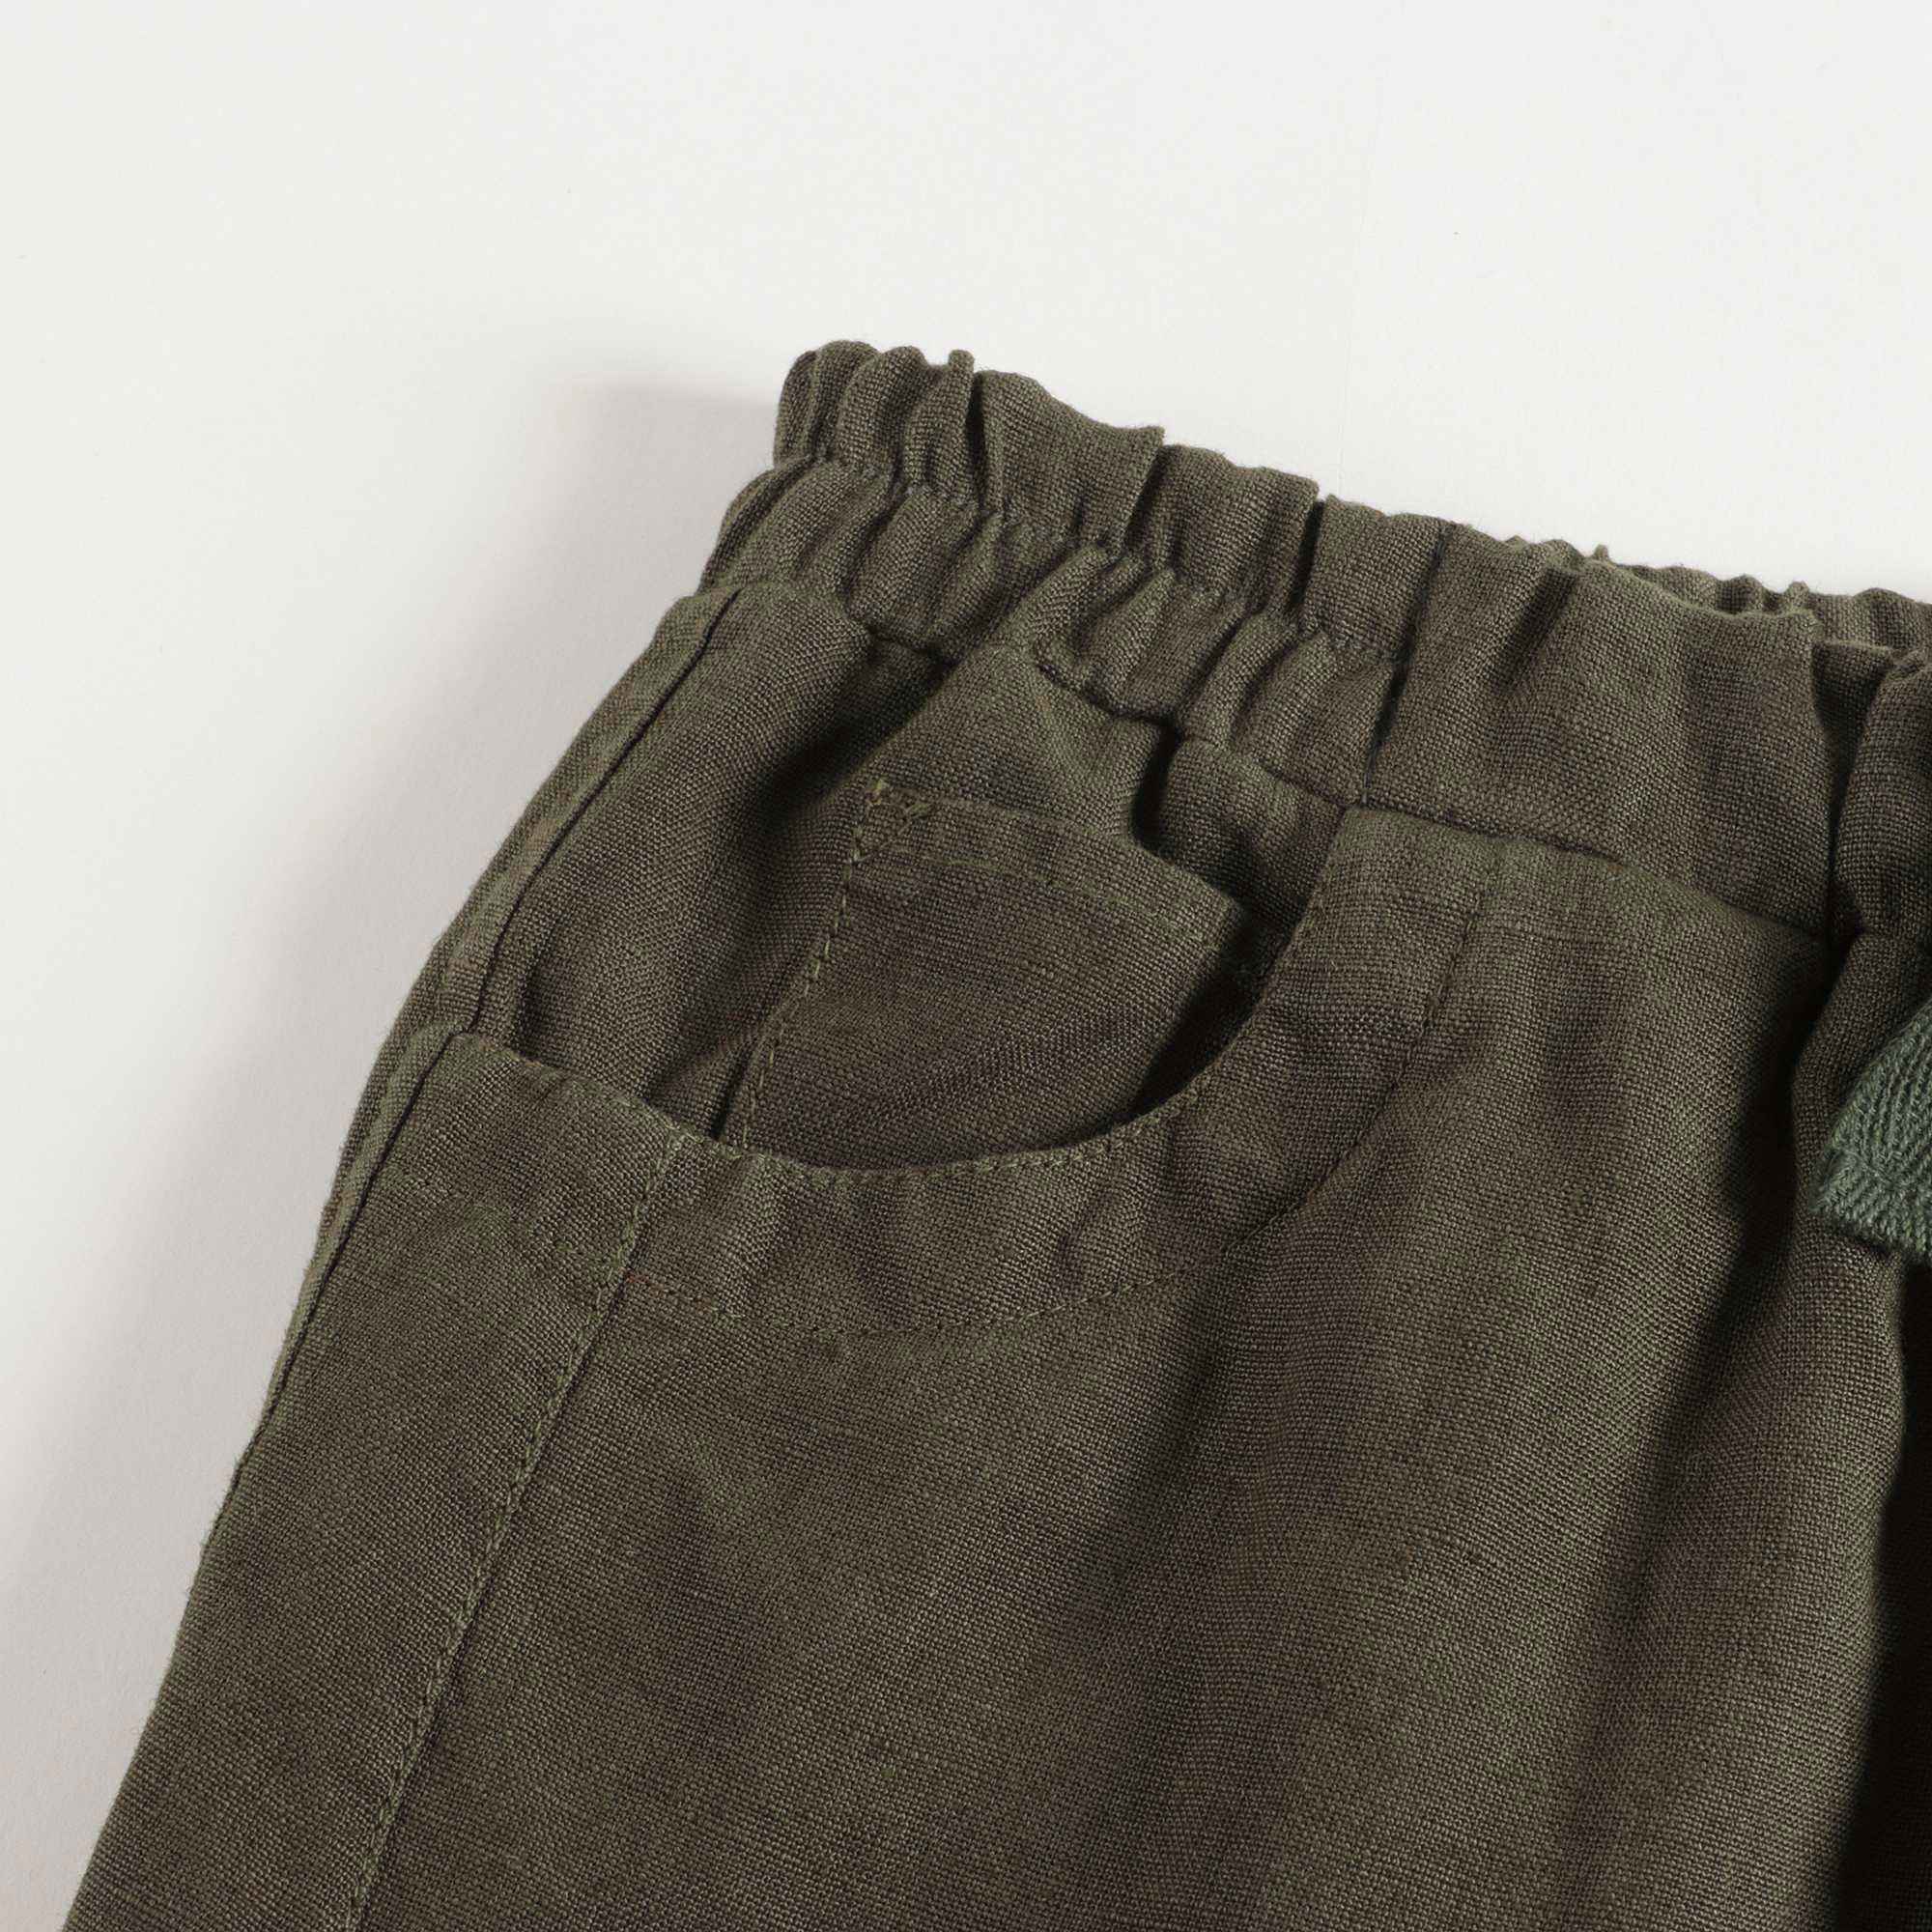 Boys & Girls Army Green Trousers